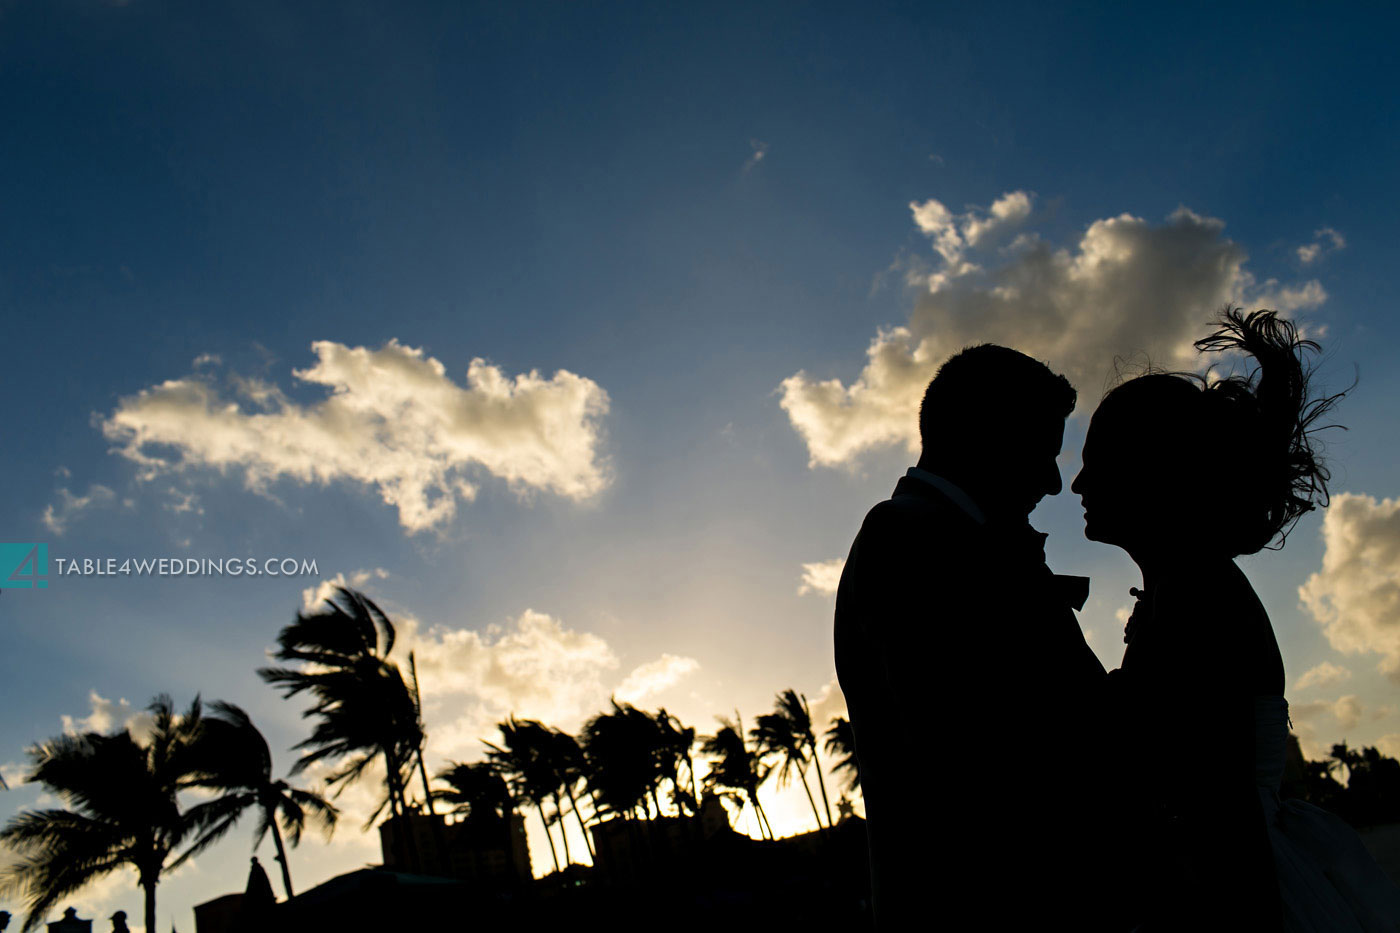 atlantis bahamas beach wedding during hurricane sandy